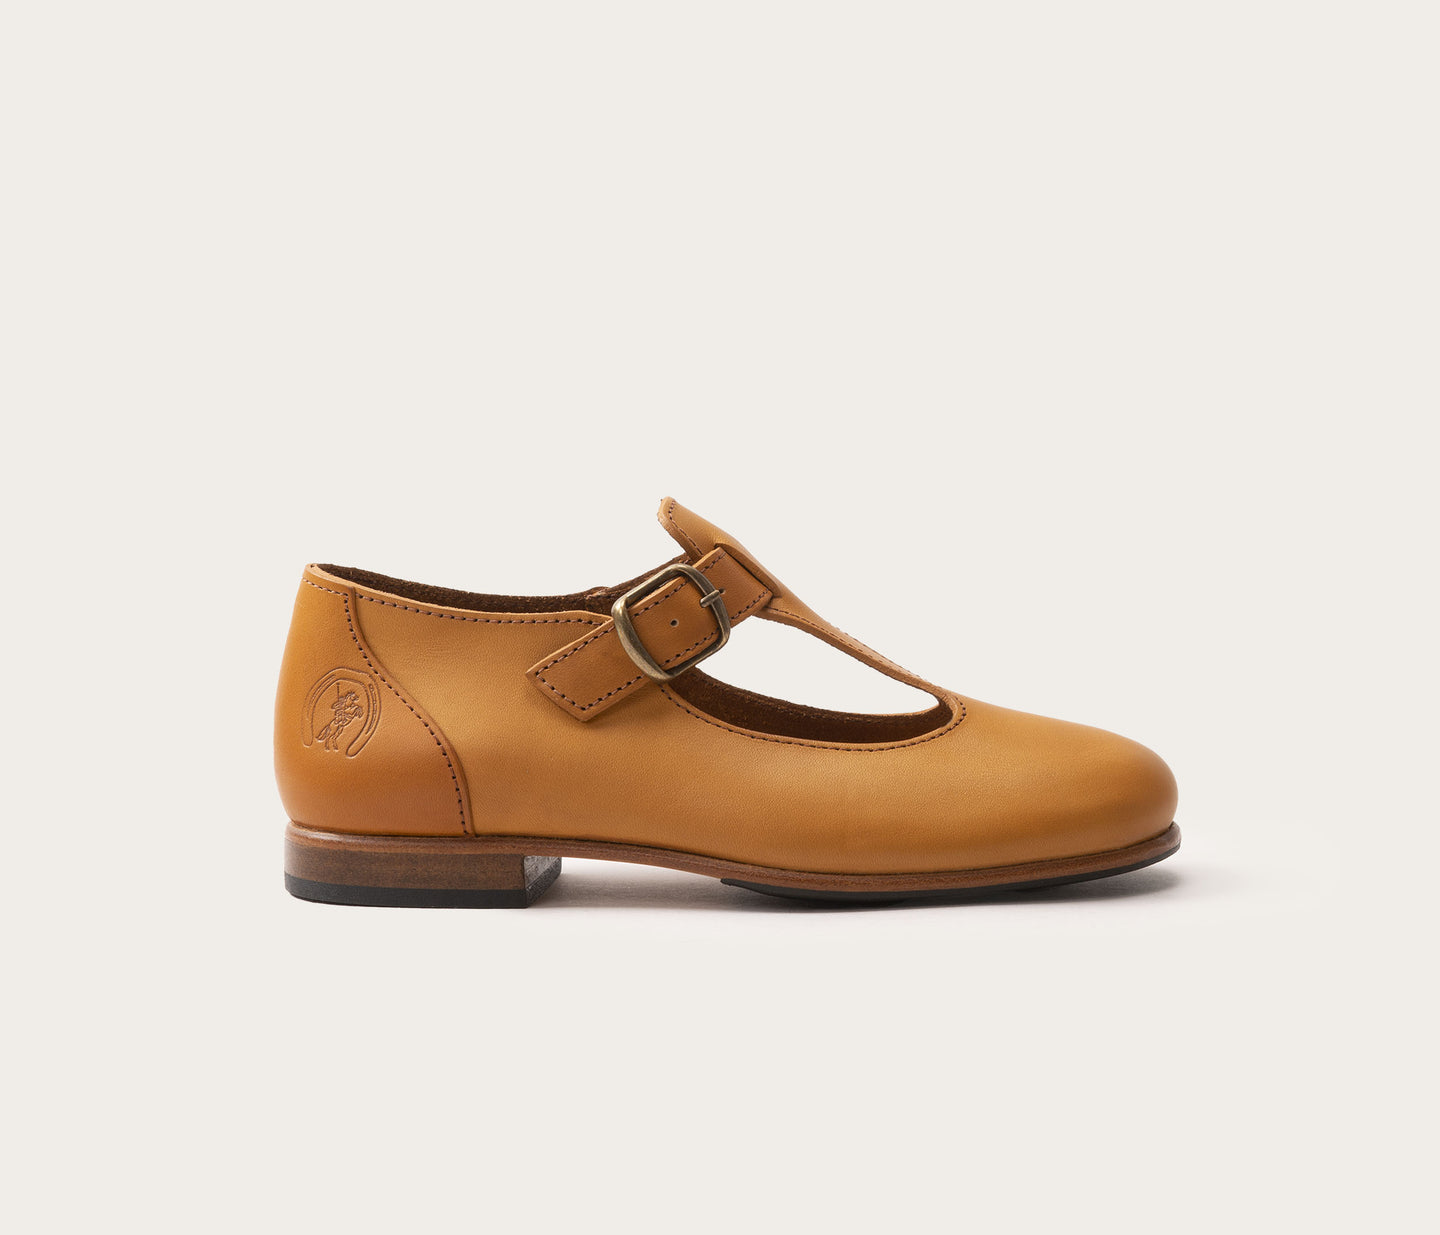 chaussure babies, chaussure en cuir, la botte gardiane - modèle New Arc - chaussure en cuir style ballerine - chaussure basse femme camarguaise - label EPV Camargue